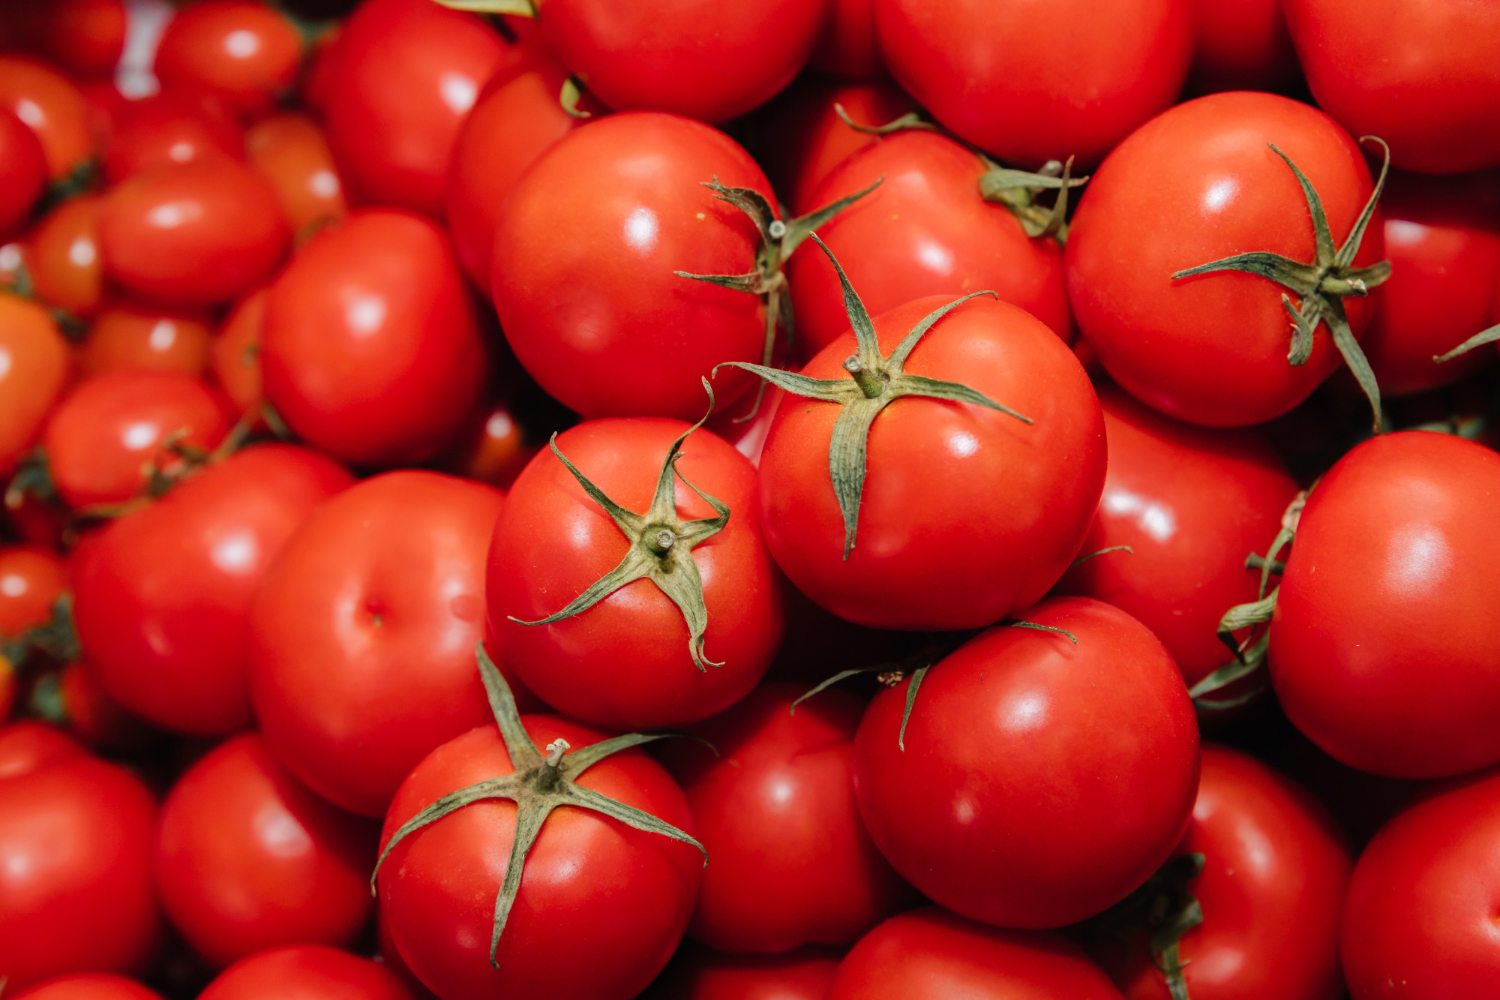 Efeitos colaterais perigosos de consumir tomates todos os dias